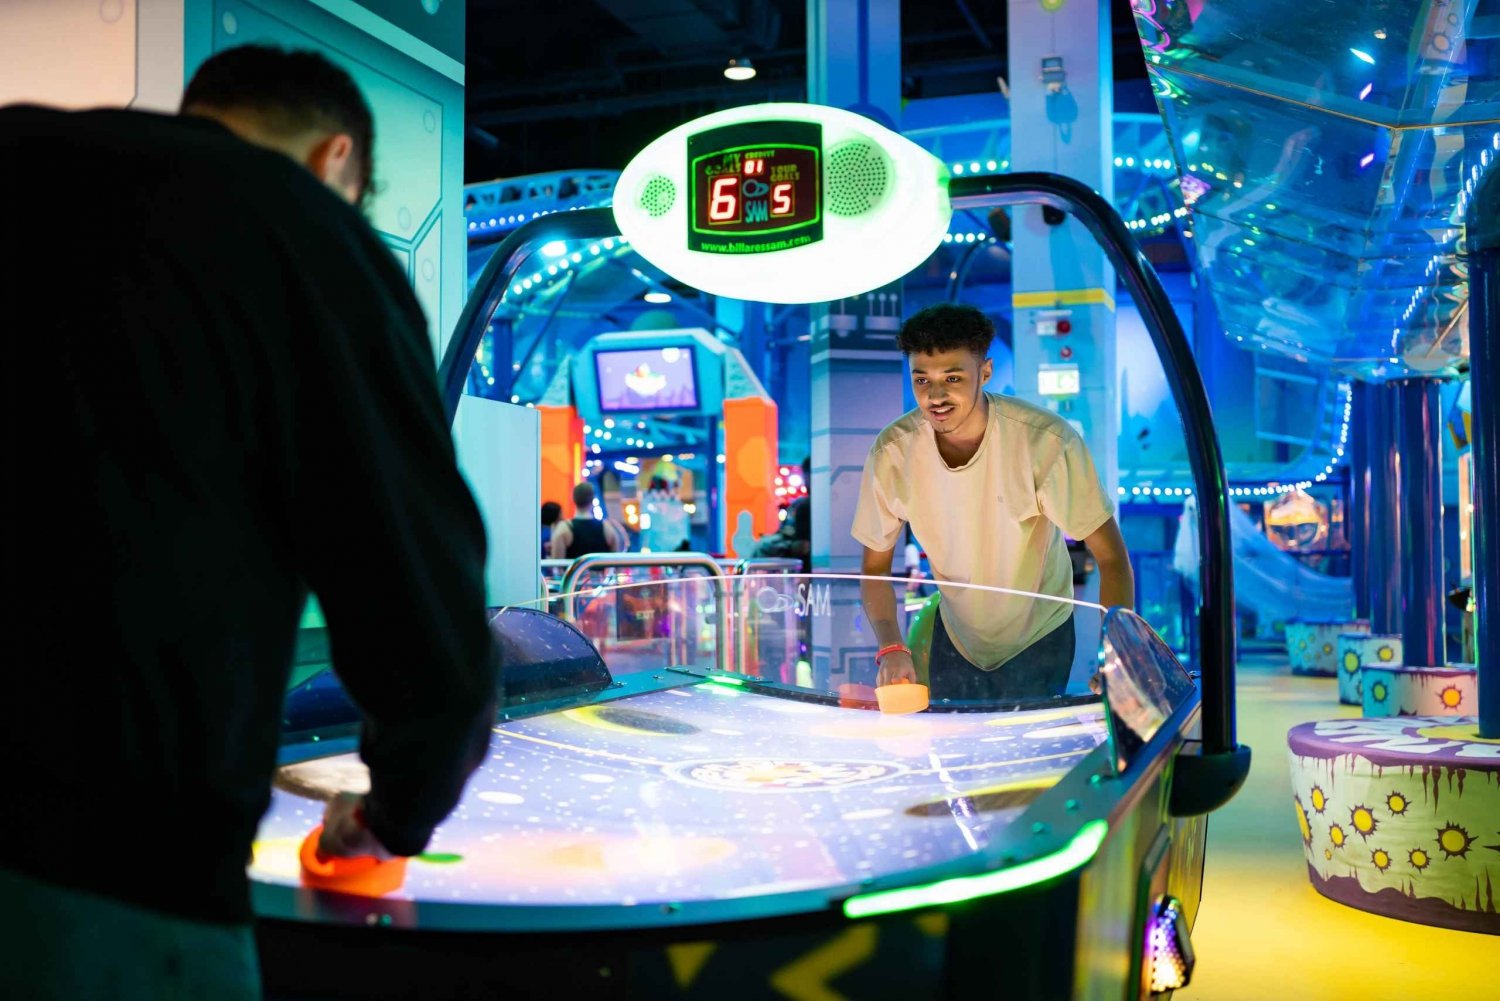 London: Babylon Park - Arcade Games and Rides in Camden